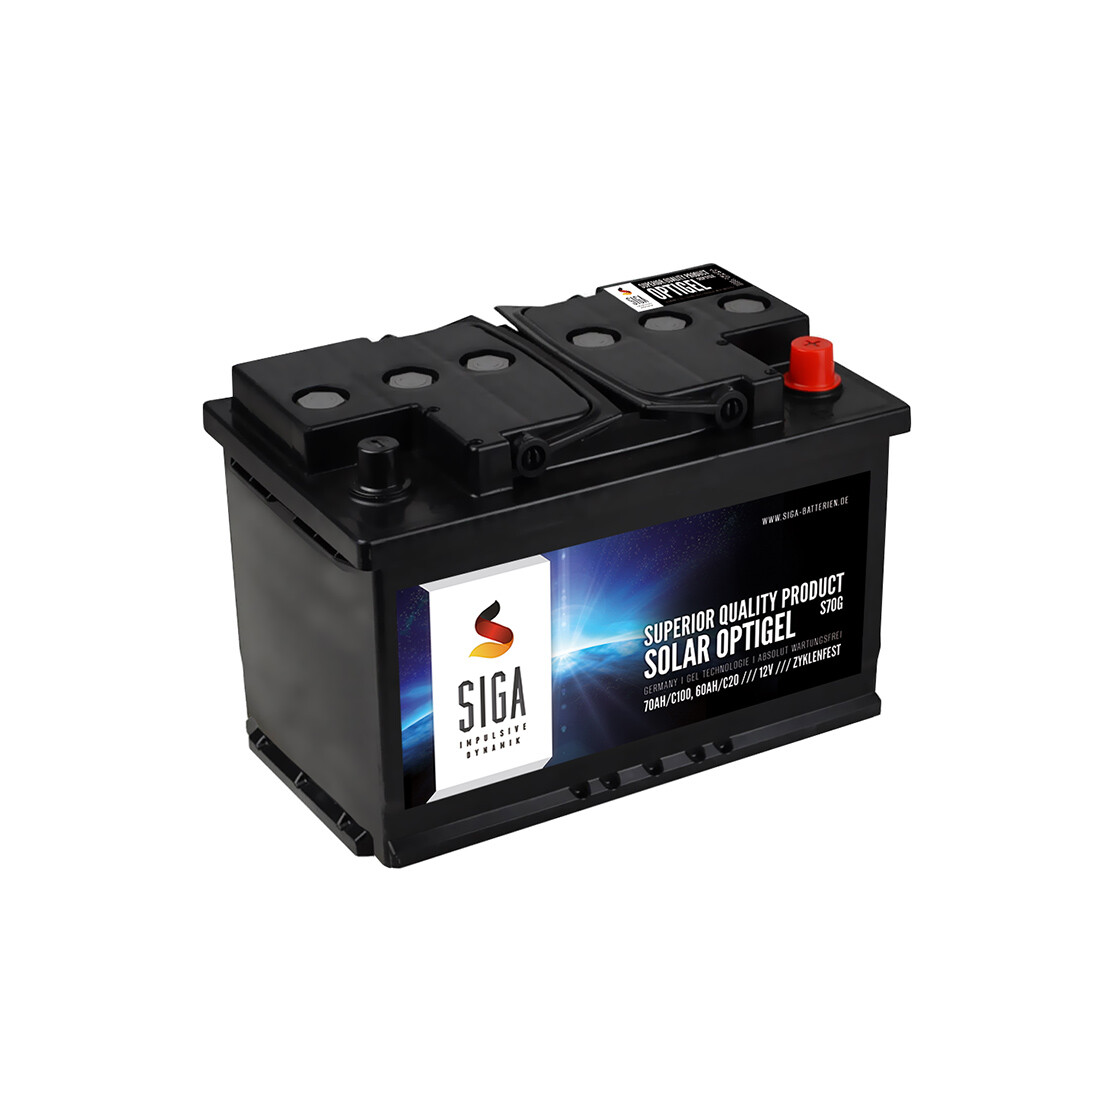 SIGA Solar OPTIGEL Batterie 70Ah 12V, 230,17 €